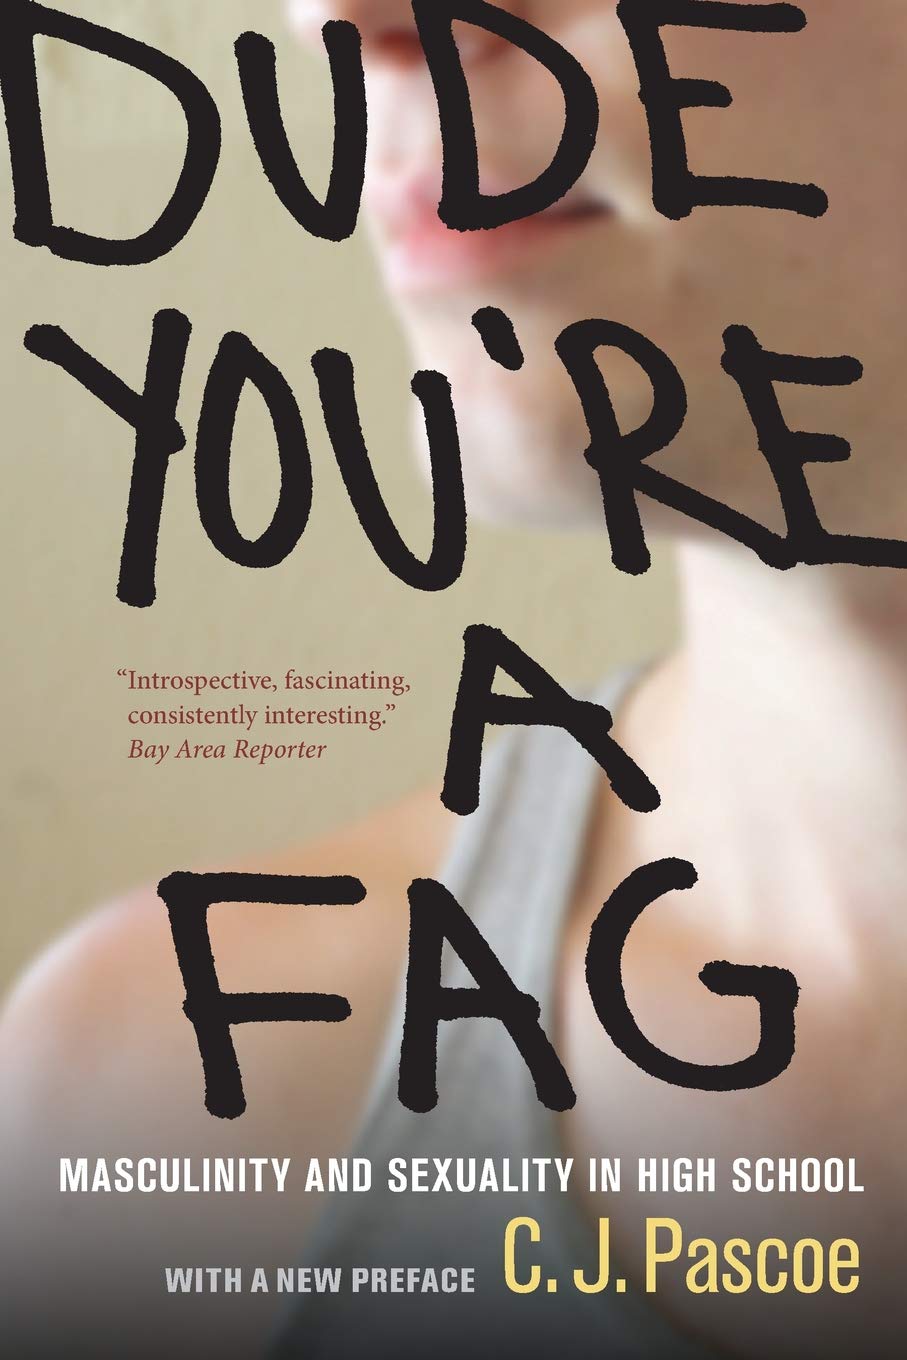 Mua Dude You re a Fag Masculinity and Sexuality in High babe trên Amazon Mỹ chính hãng